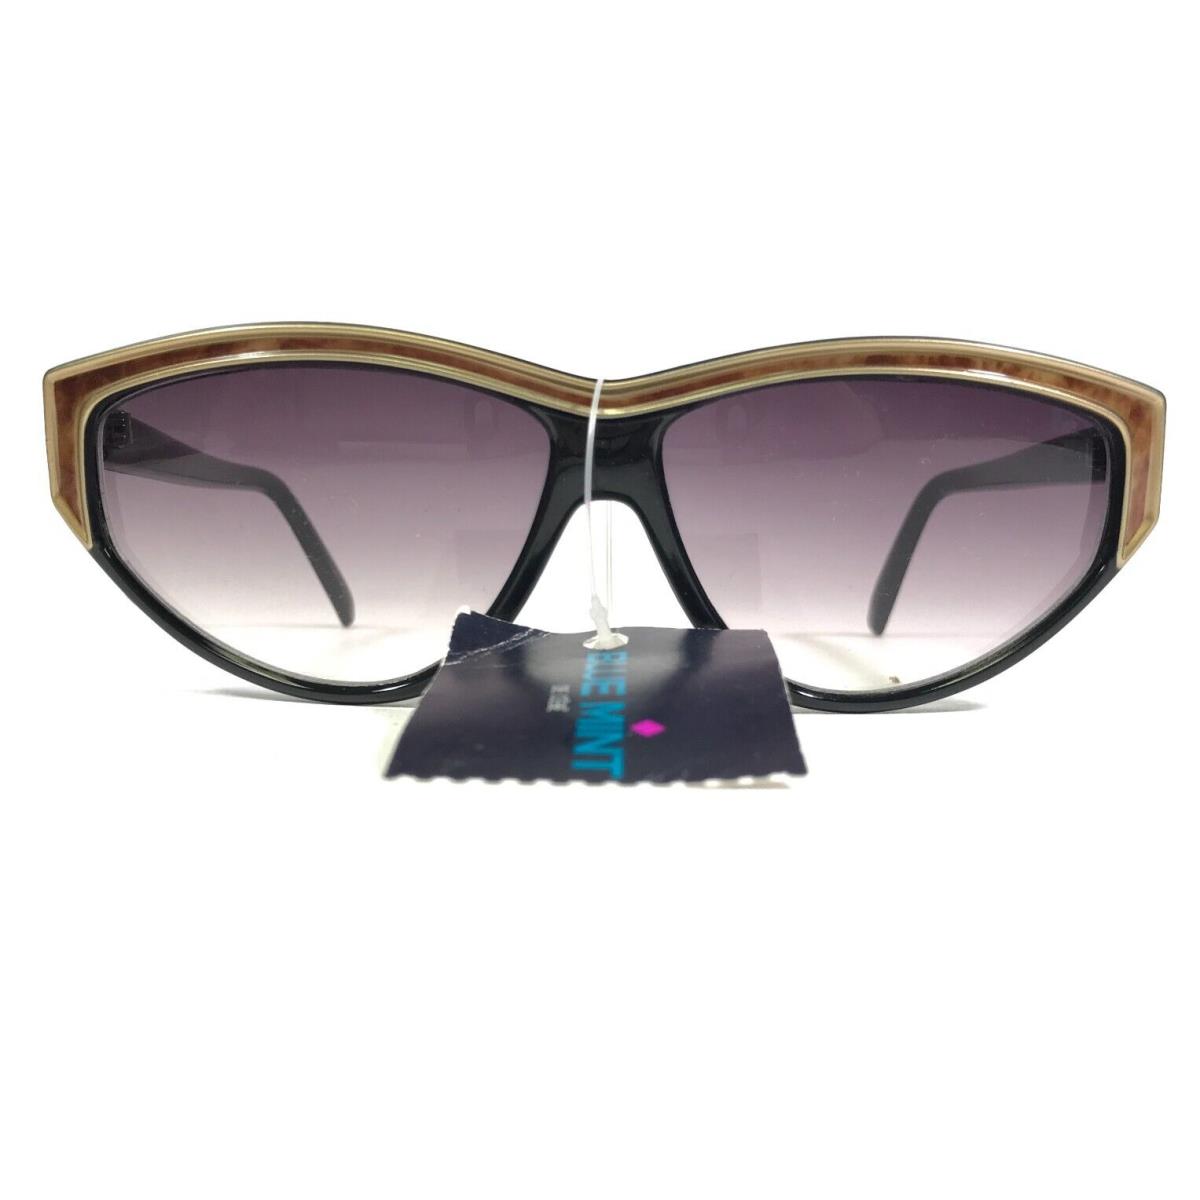 Vintage Cebe Sunglasses Black Gold Geometric Frames with Purple Gradient Lenses